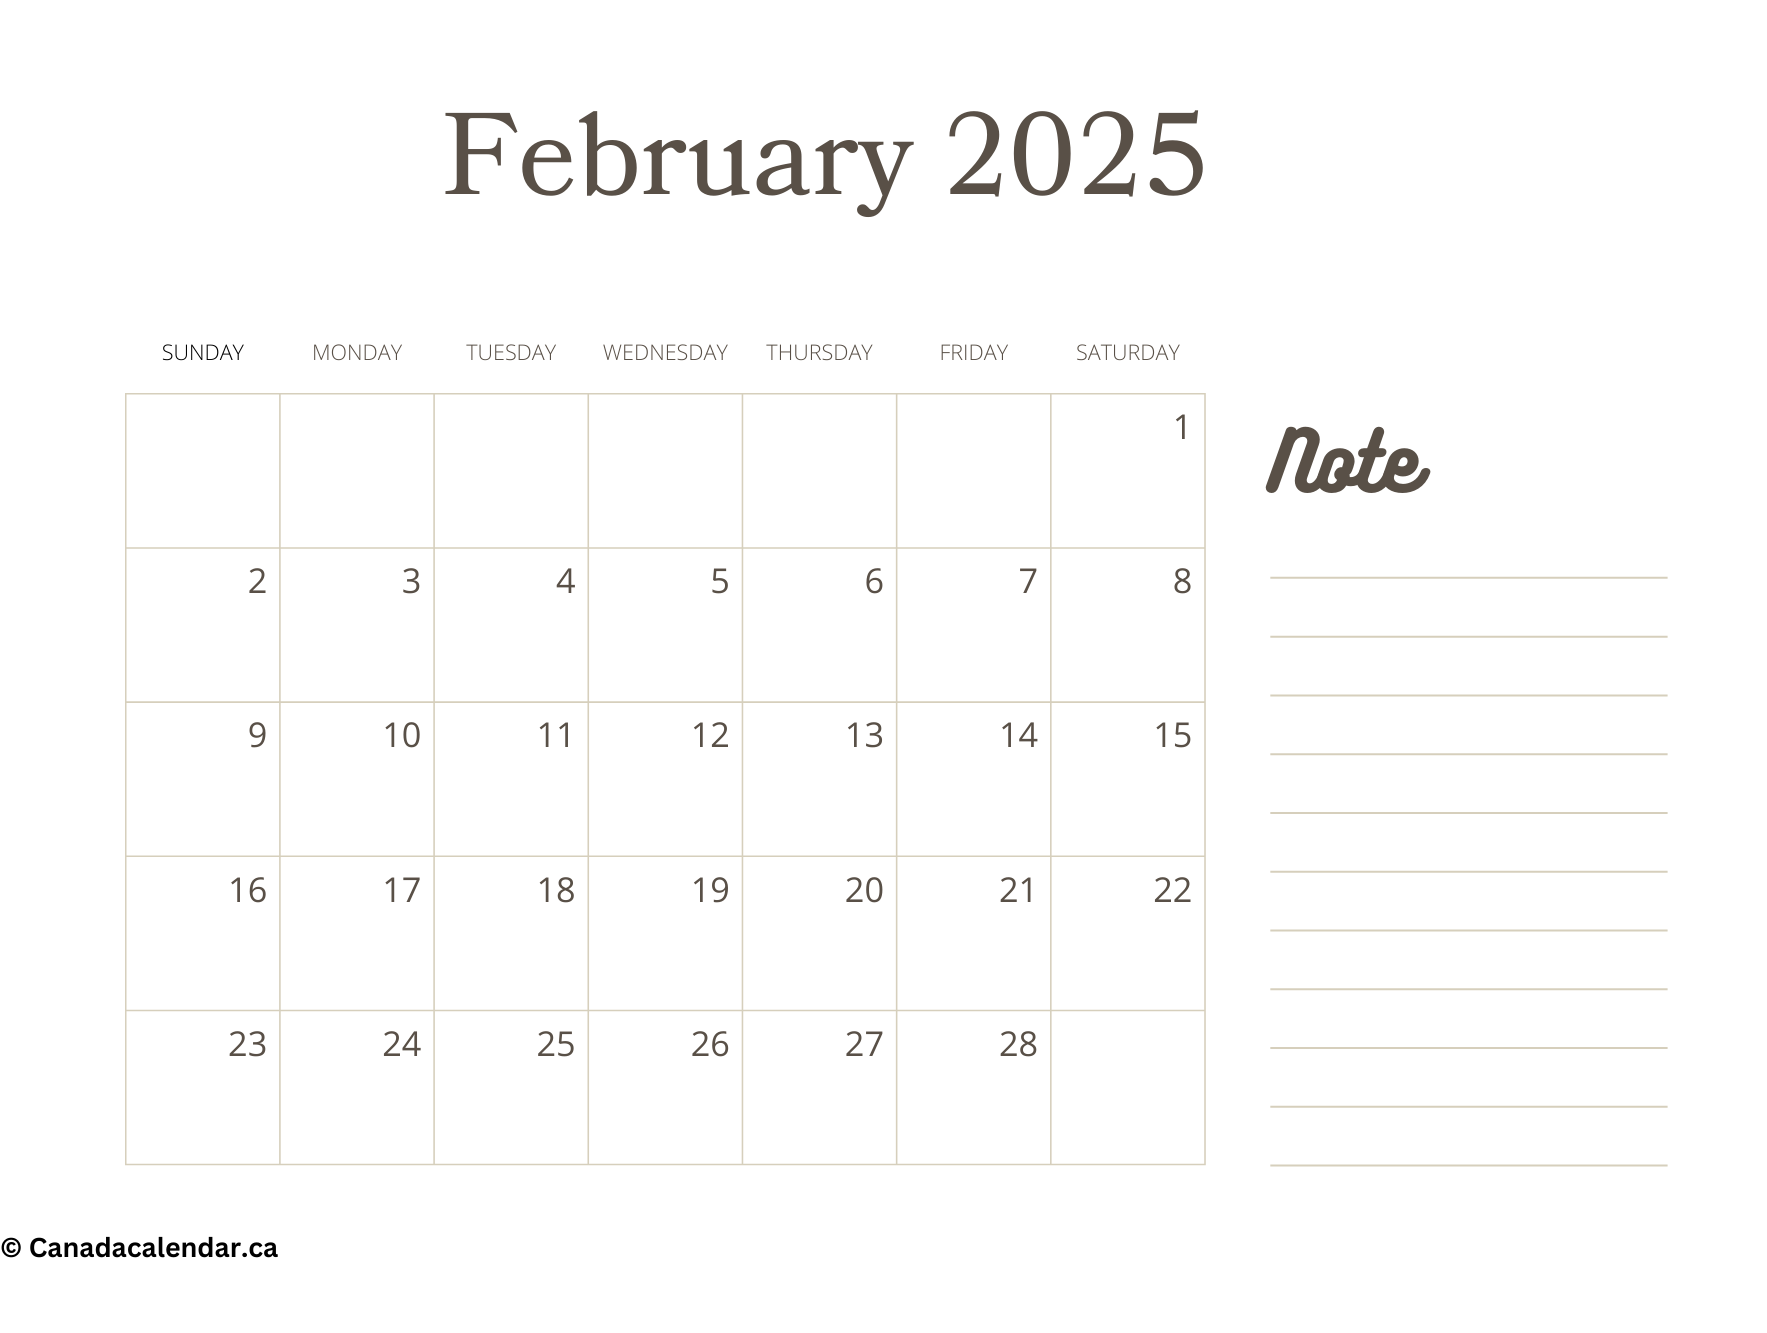 February 2025 Calendar With Holidays (Notes)